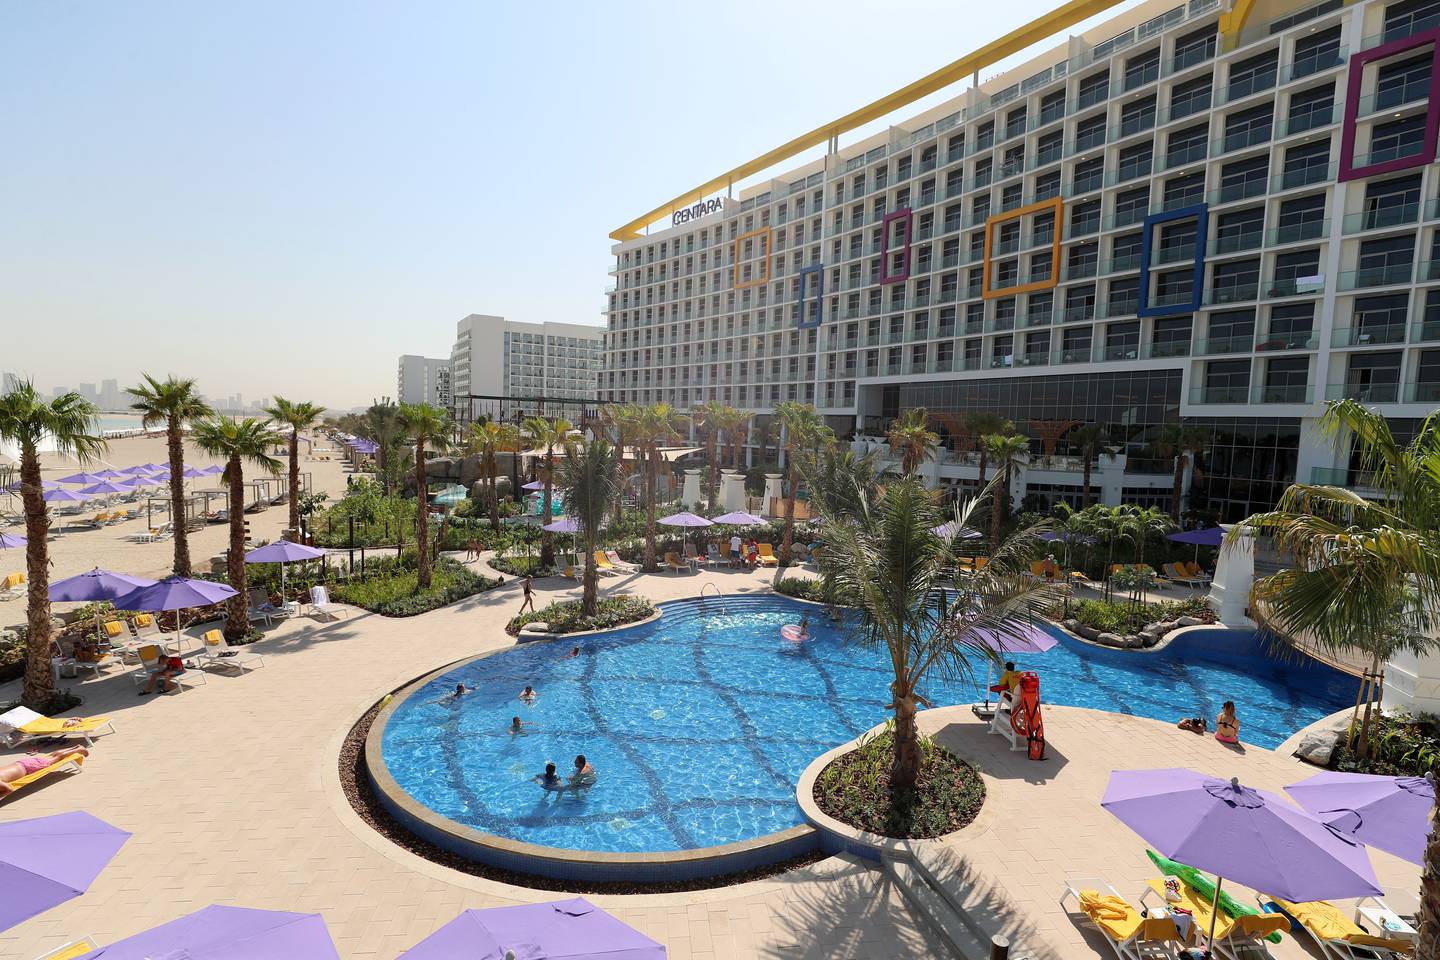 The family-friendly Centara Mirage Beach Resort Dubai at Deira Islands. Chris Whiteoak / The National